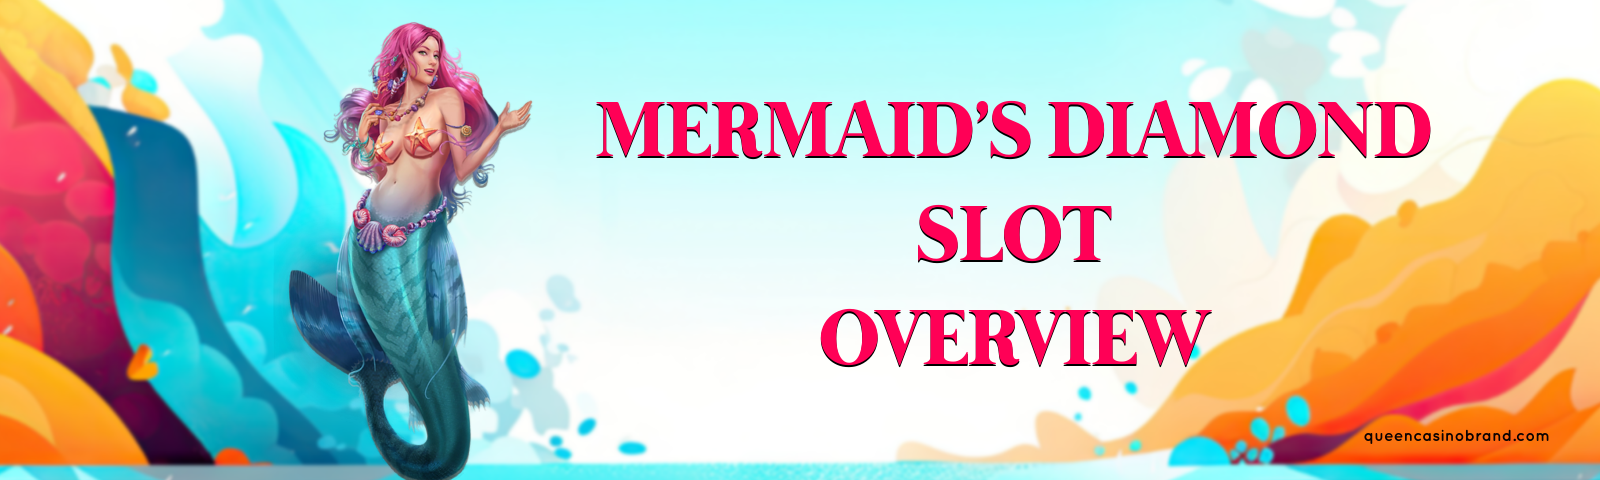 Mermaid’s Diamond Slot by Play'n Go